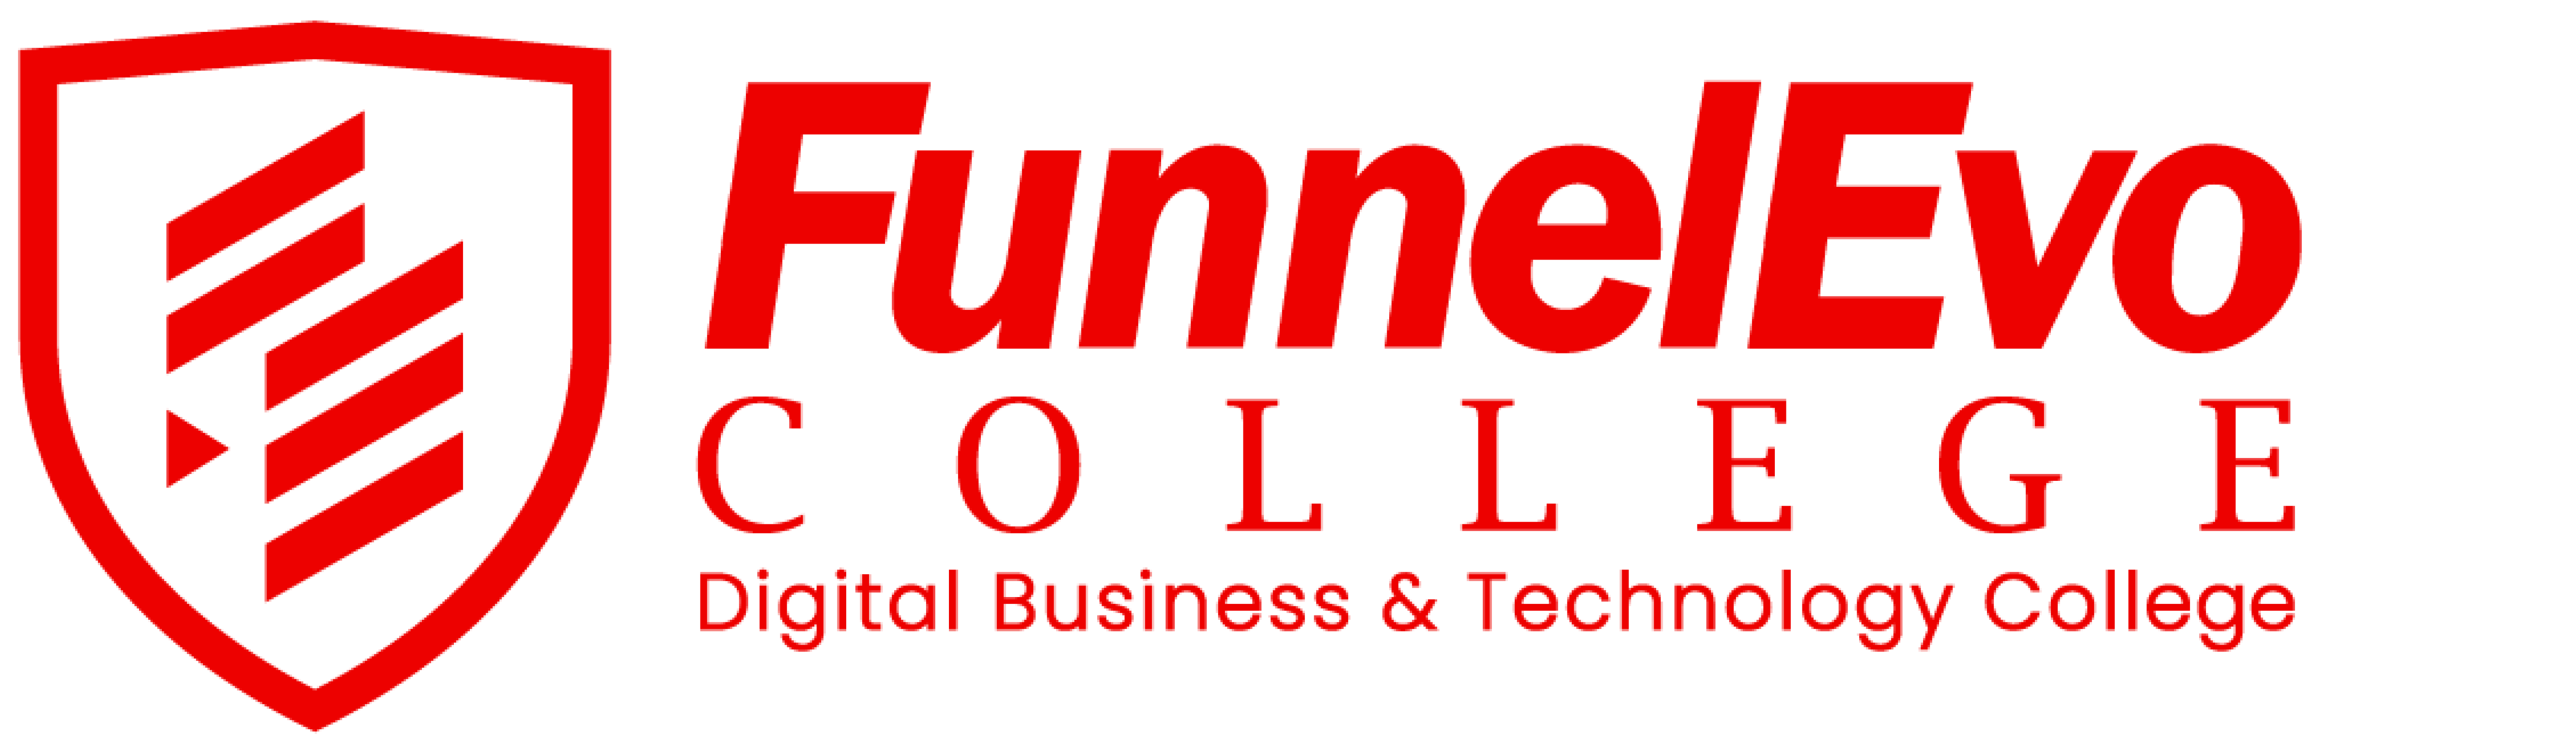 FunnelEvo College – Digital Business & Technology